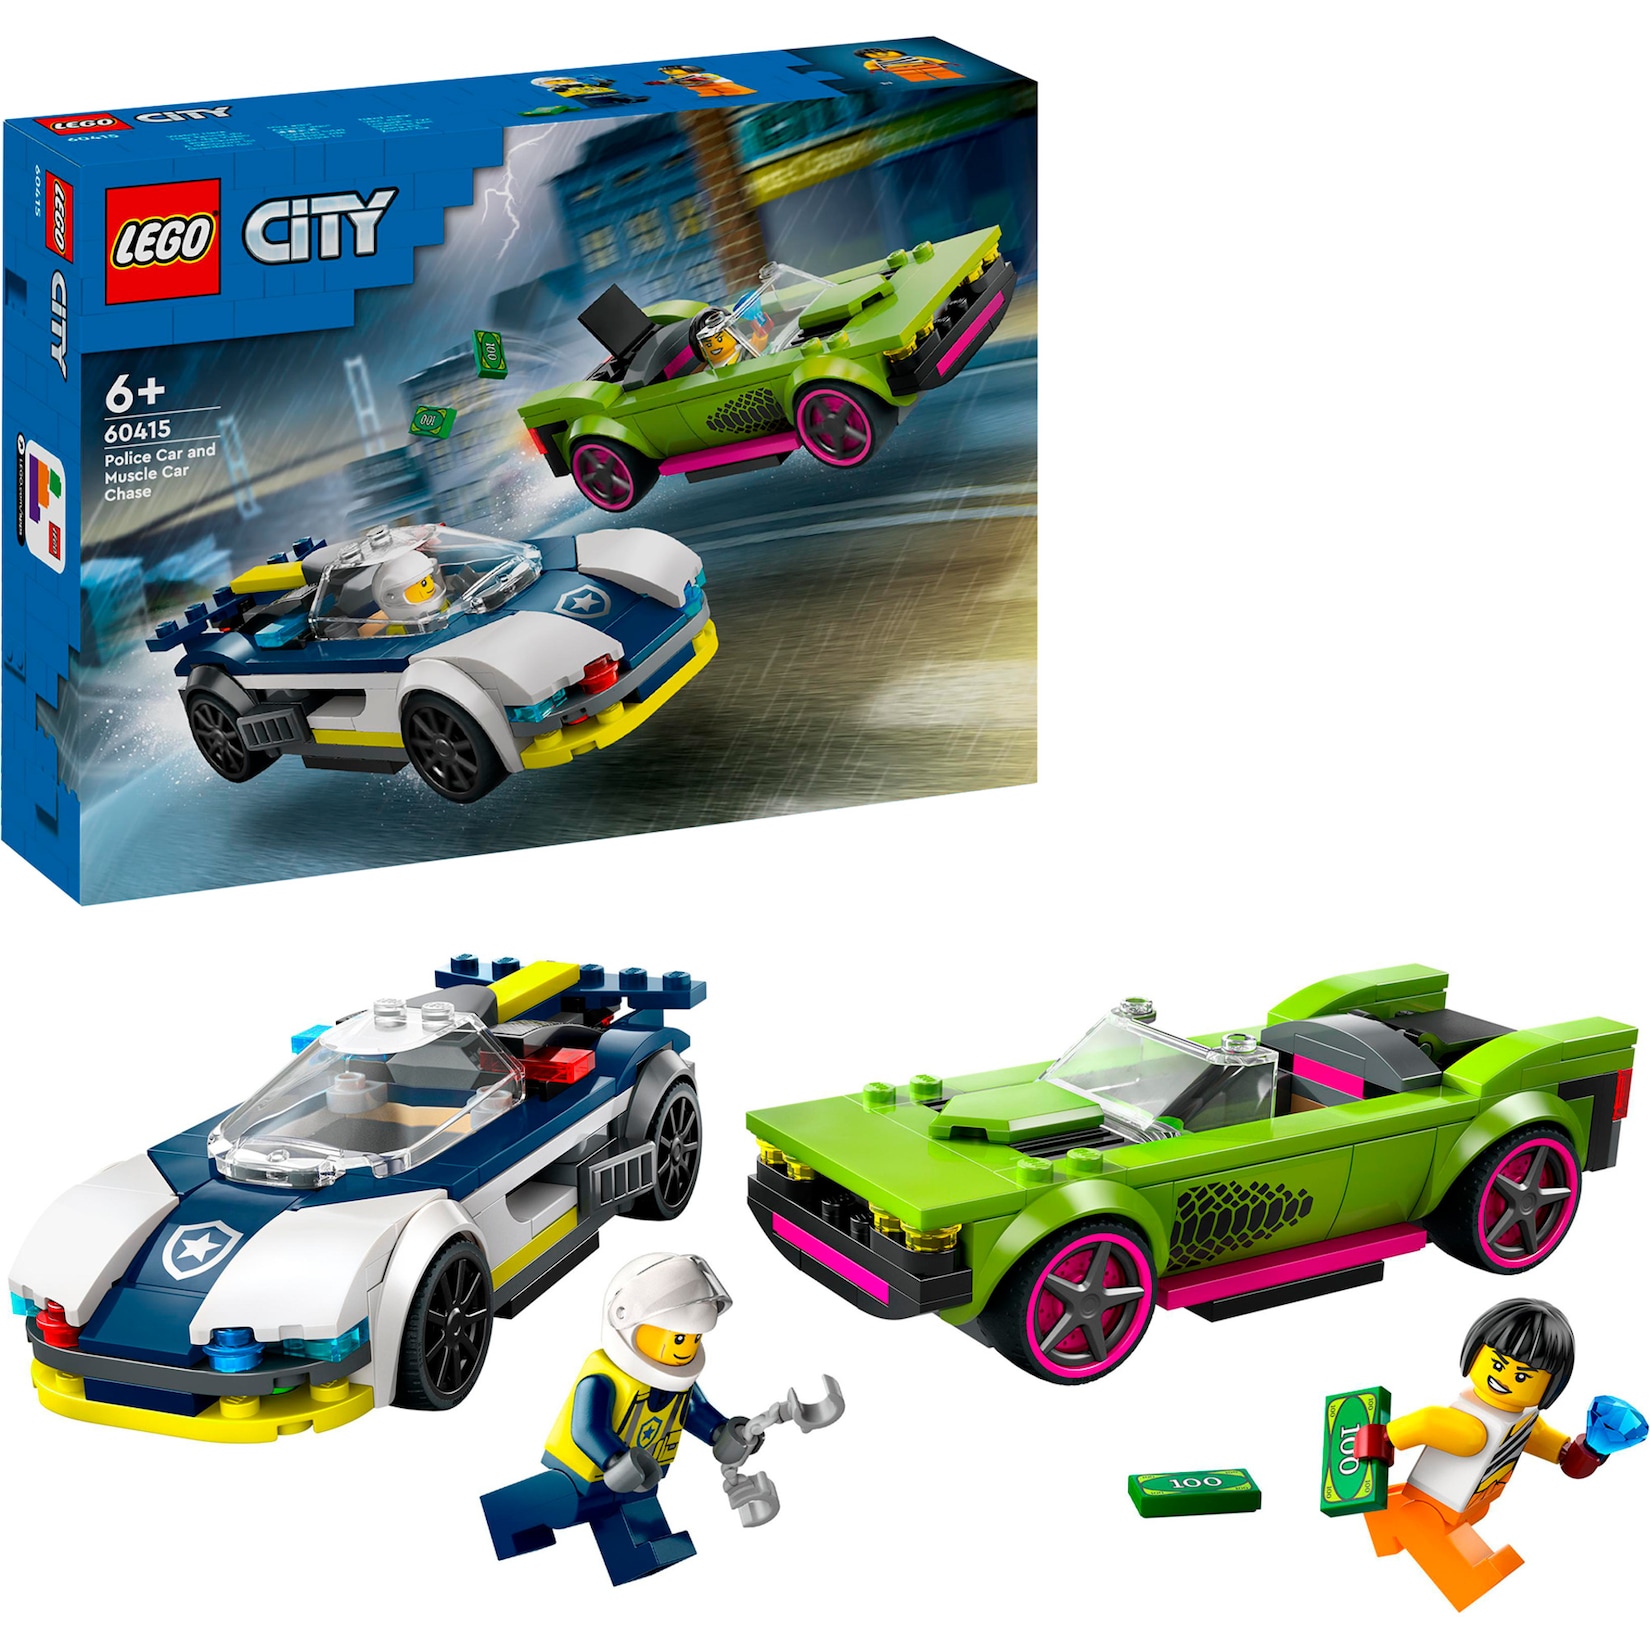 LEGO Konstruktionsspielzeug City Verfolgungsjagd mit Polizeiauto und Muscle Car